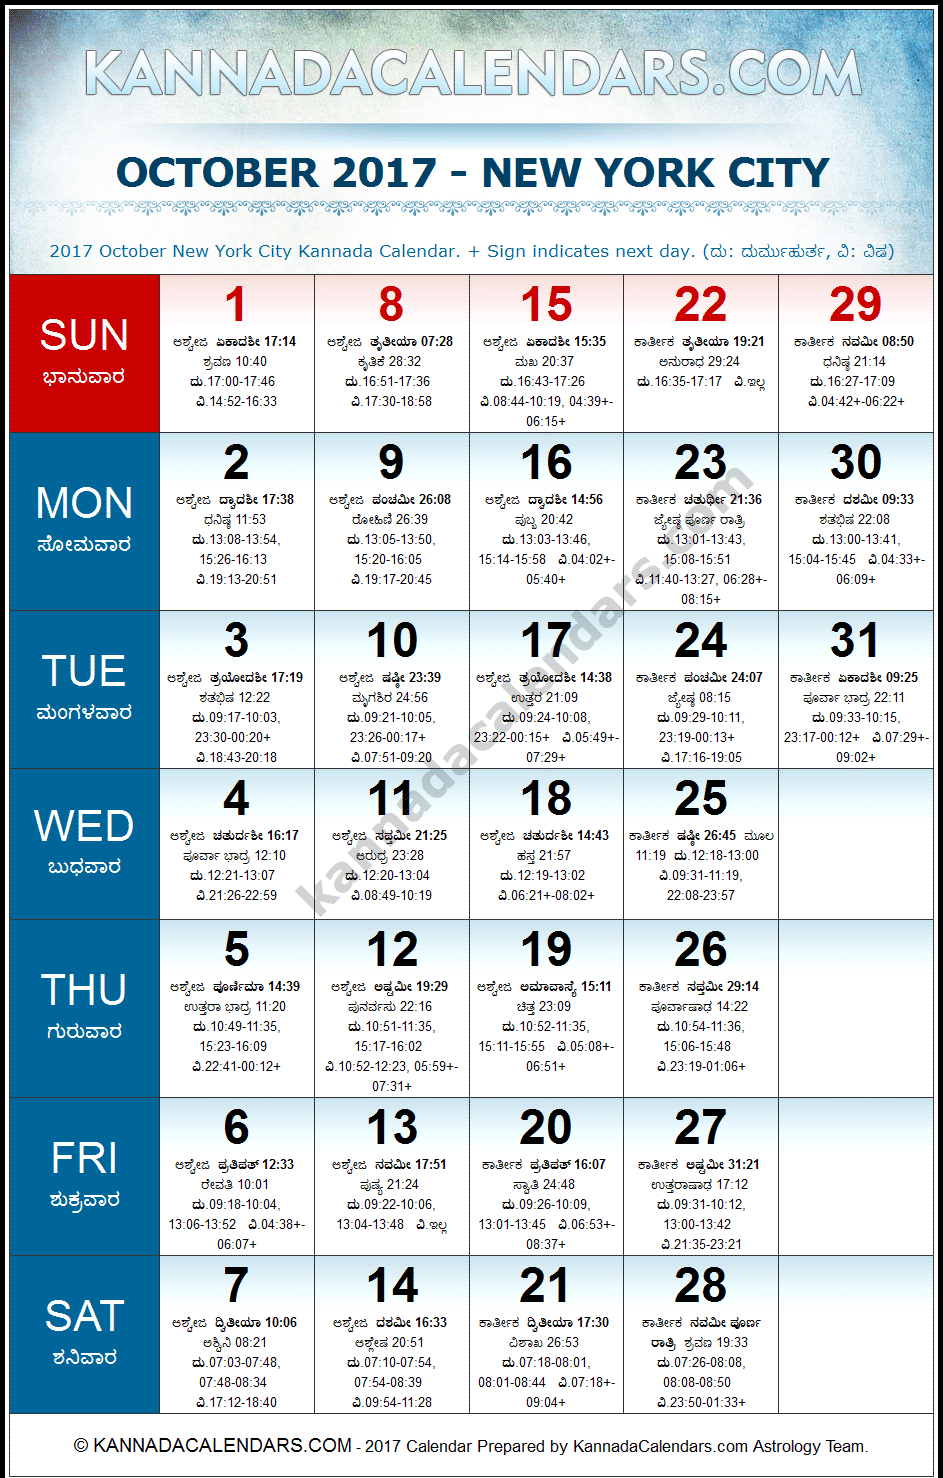 October 2017 Kannada Calendar for New York, USA